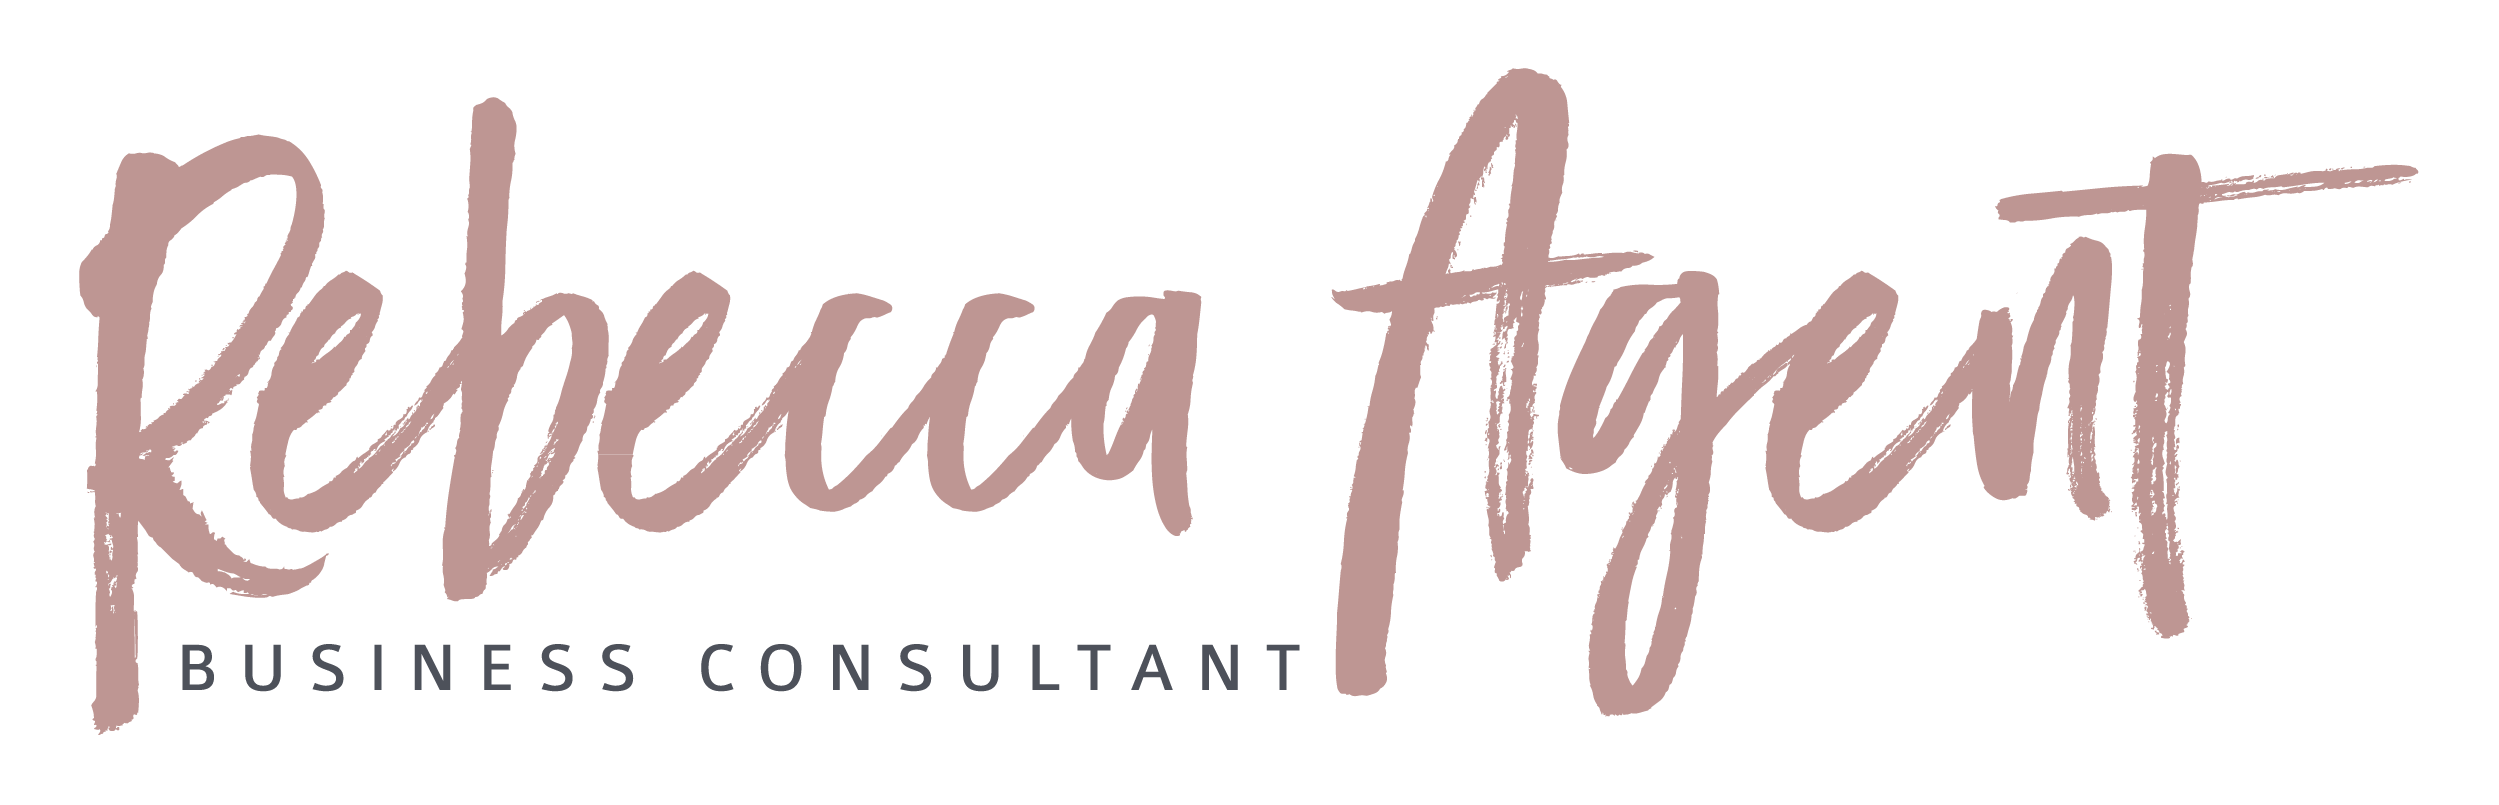 Rebecca Agent Business Consultant